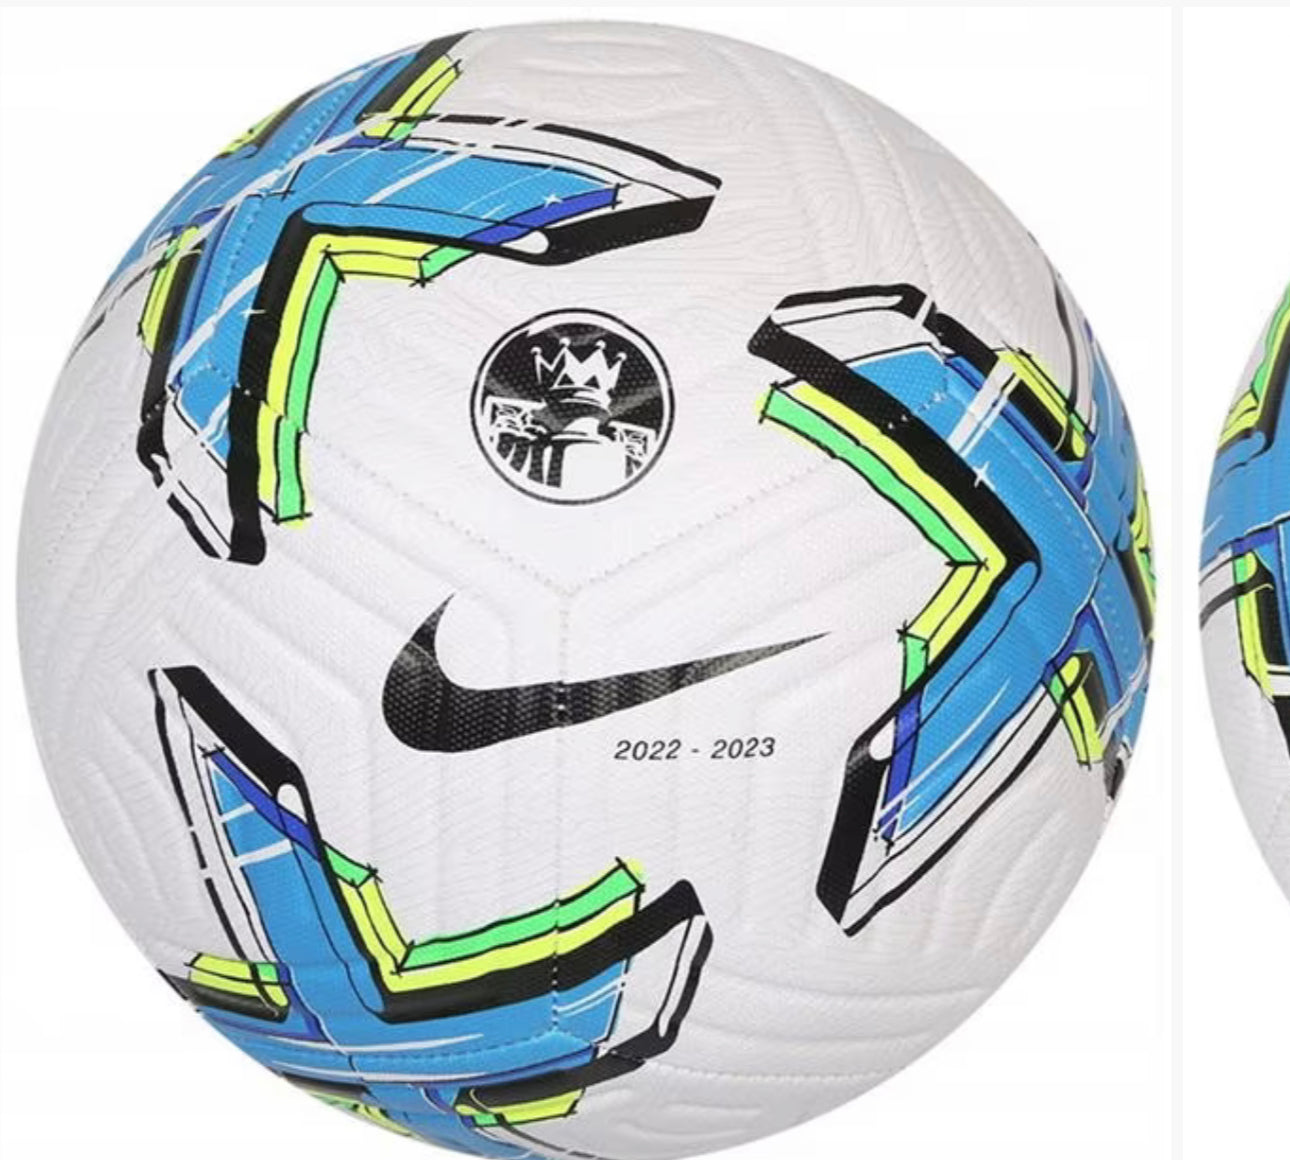 Nike Academy Premier League Football 2022/23 White Blue Lime